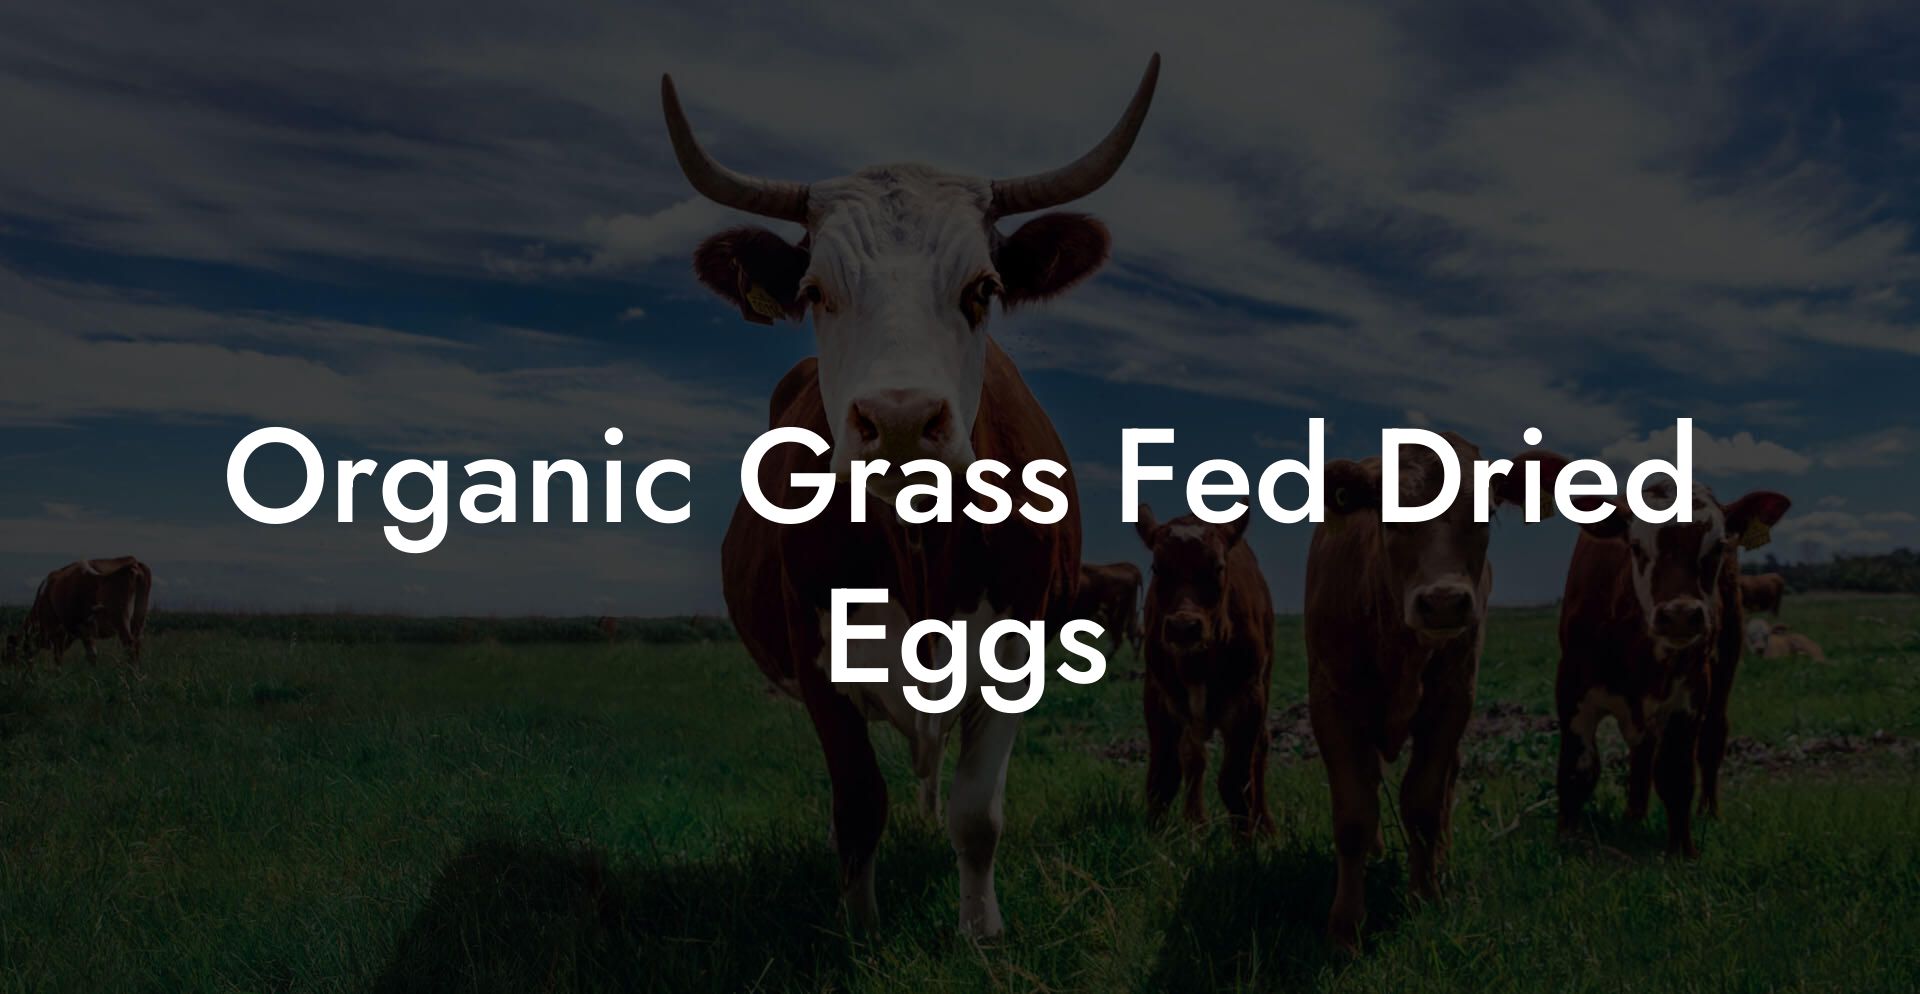 Organic Grass Fed Dried Eggs